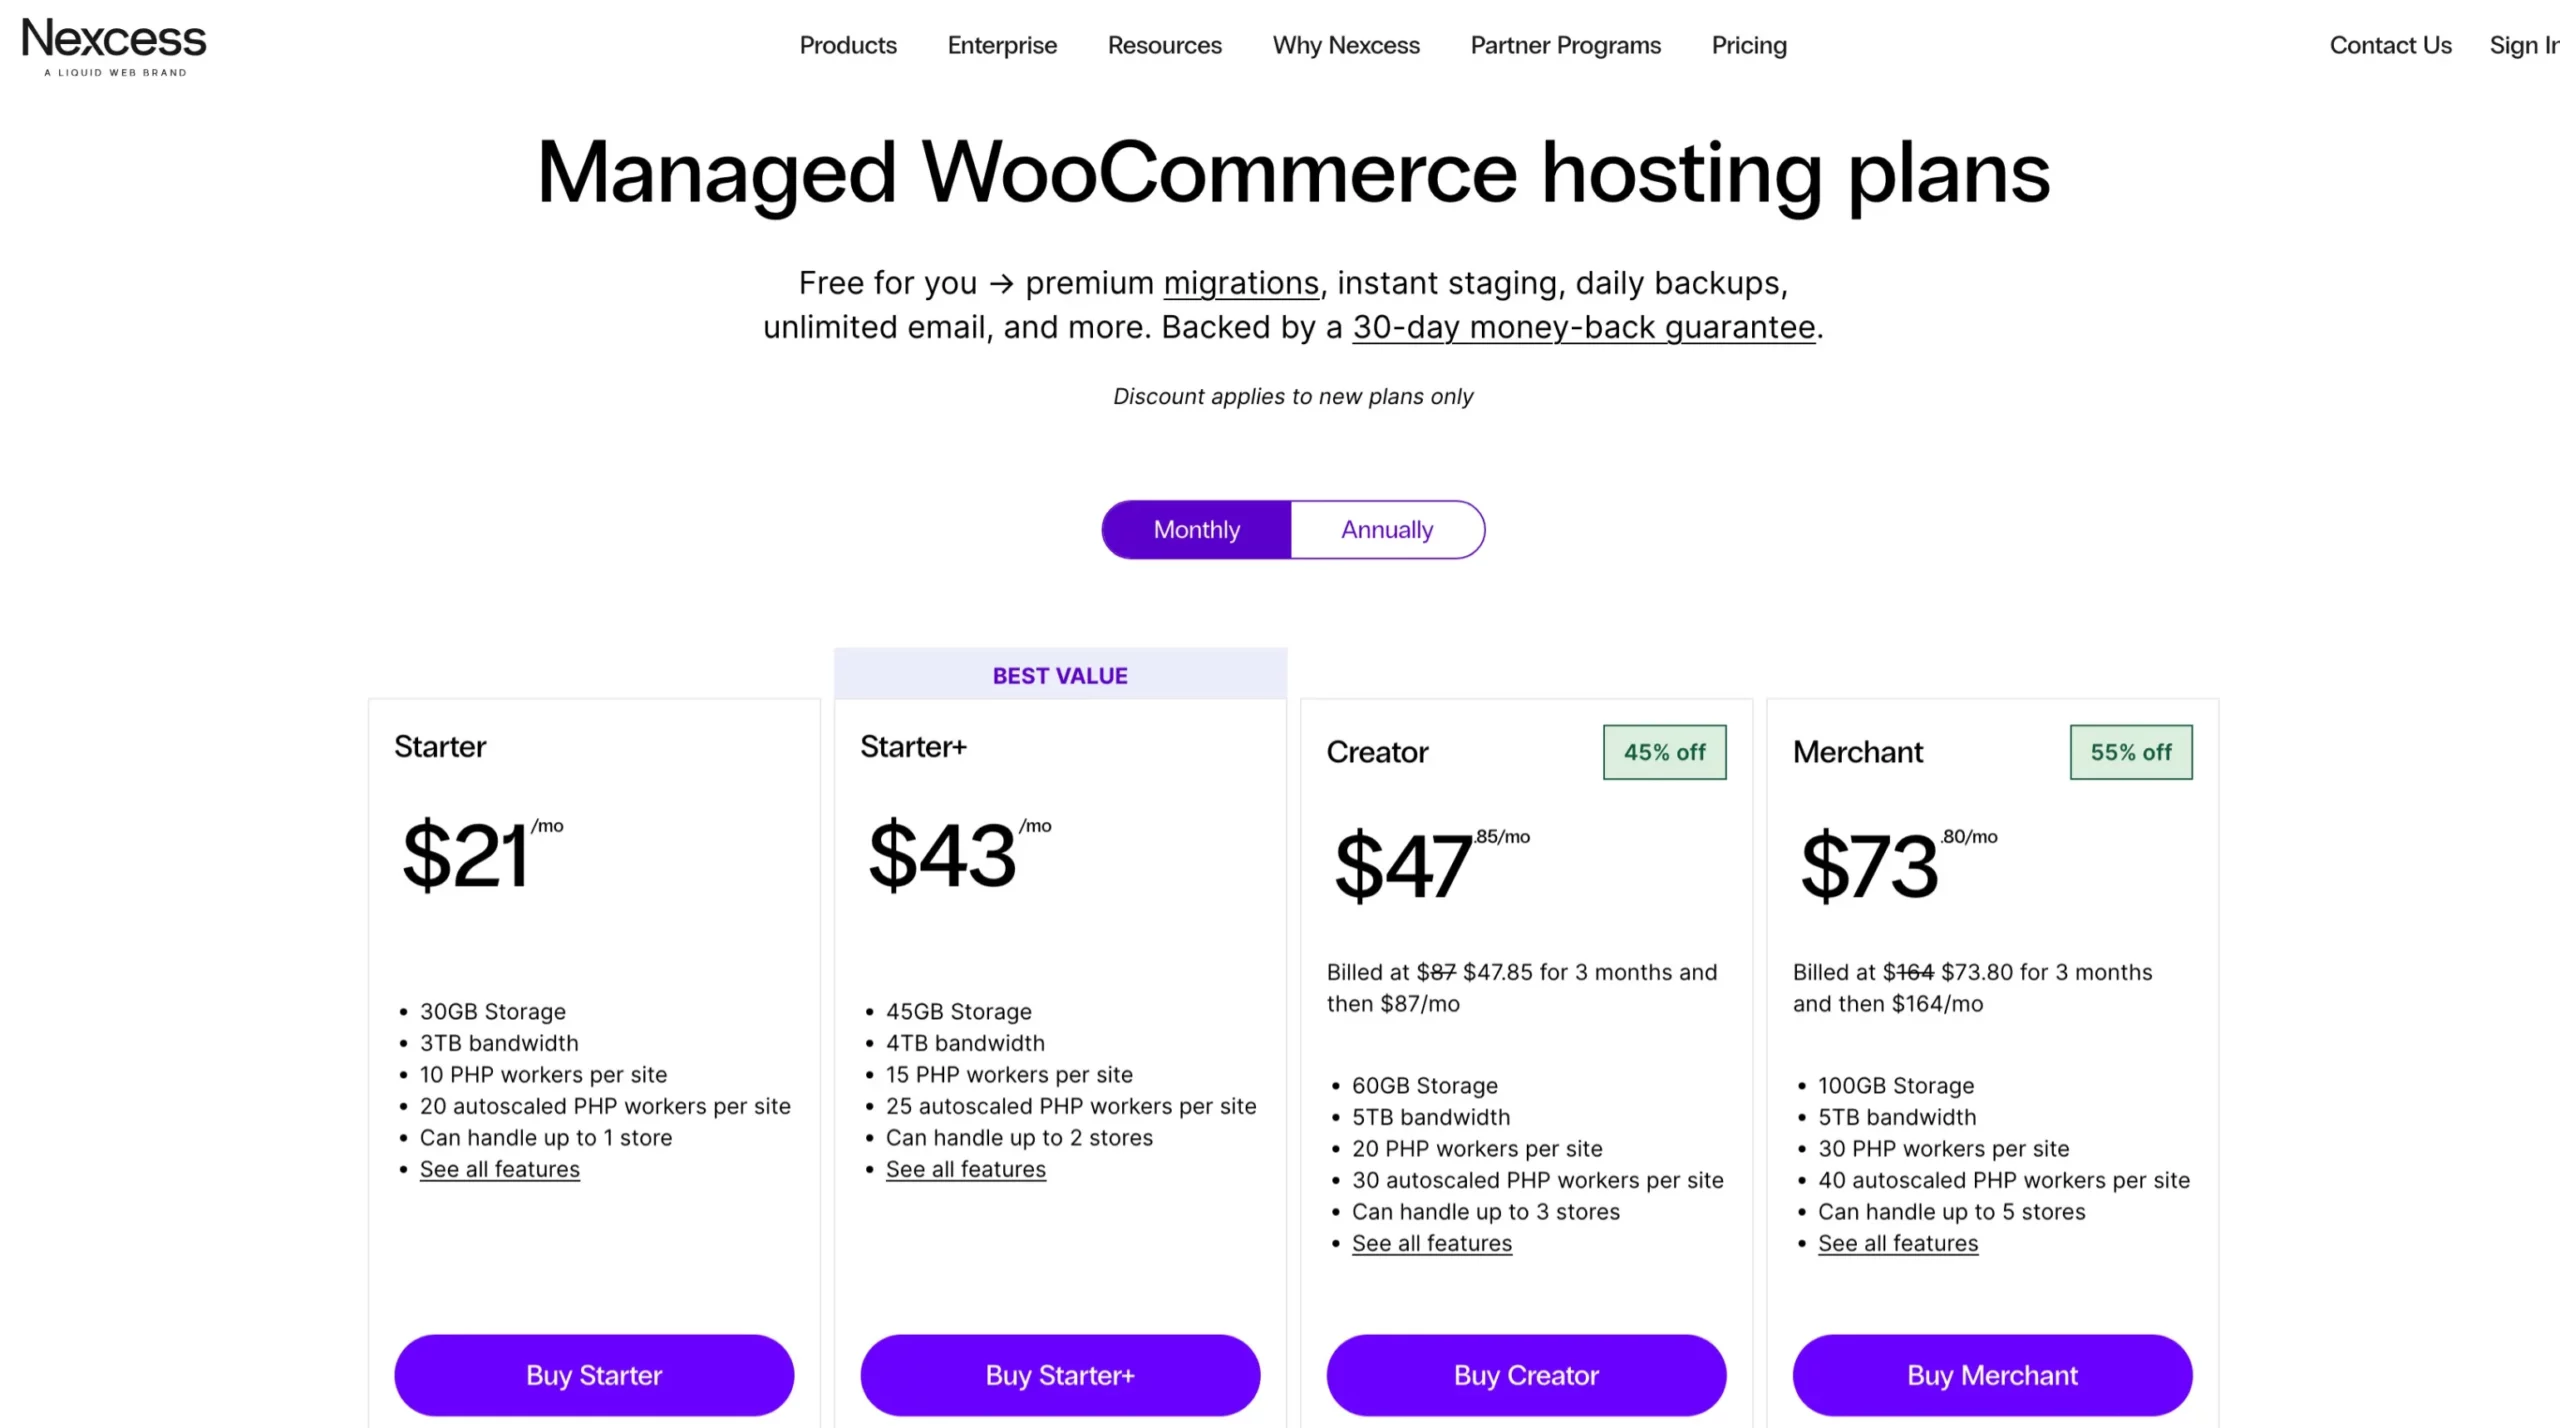 Managed WooCommerce hosting plans